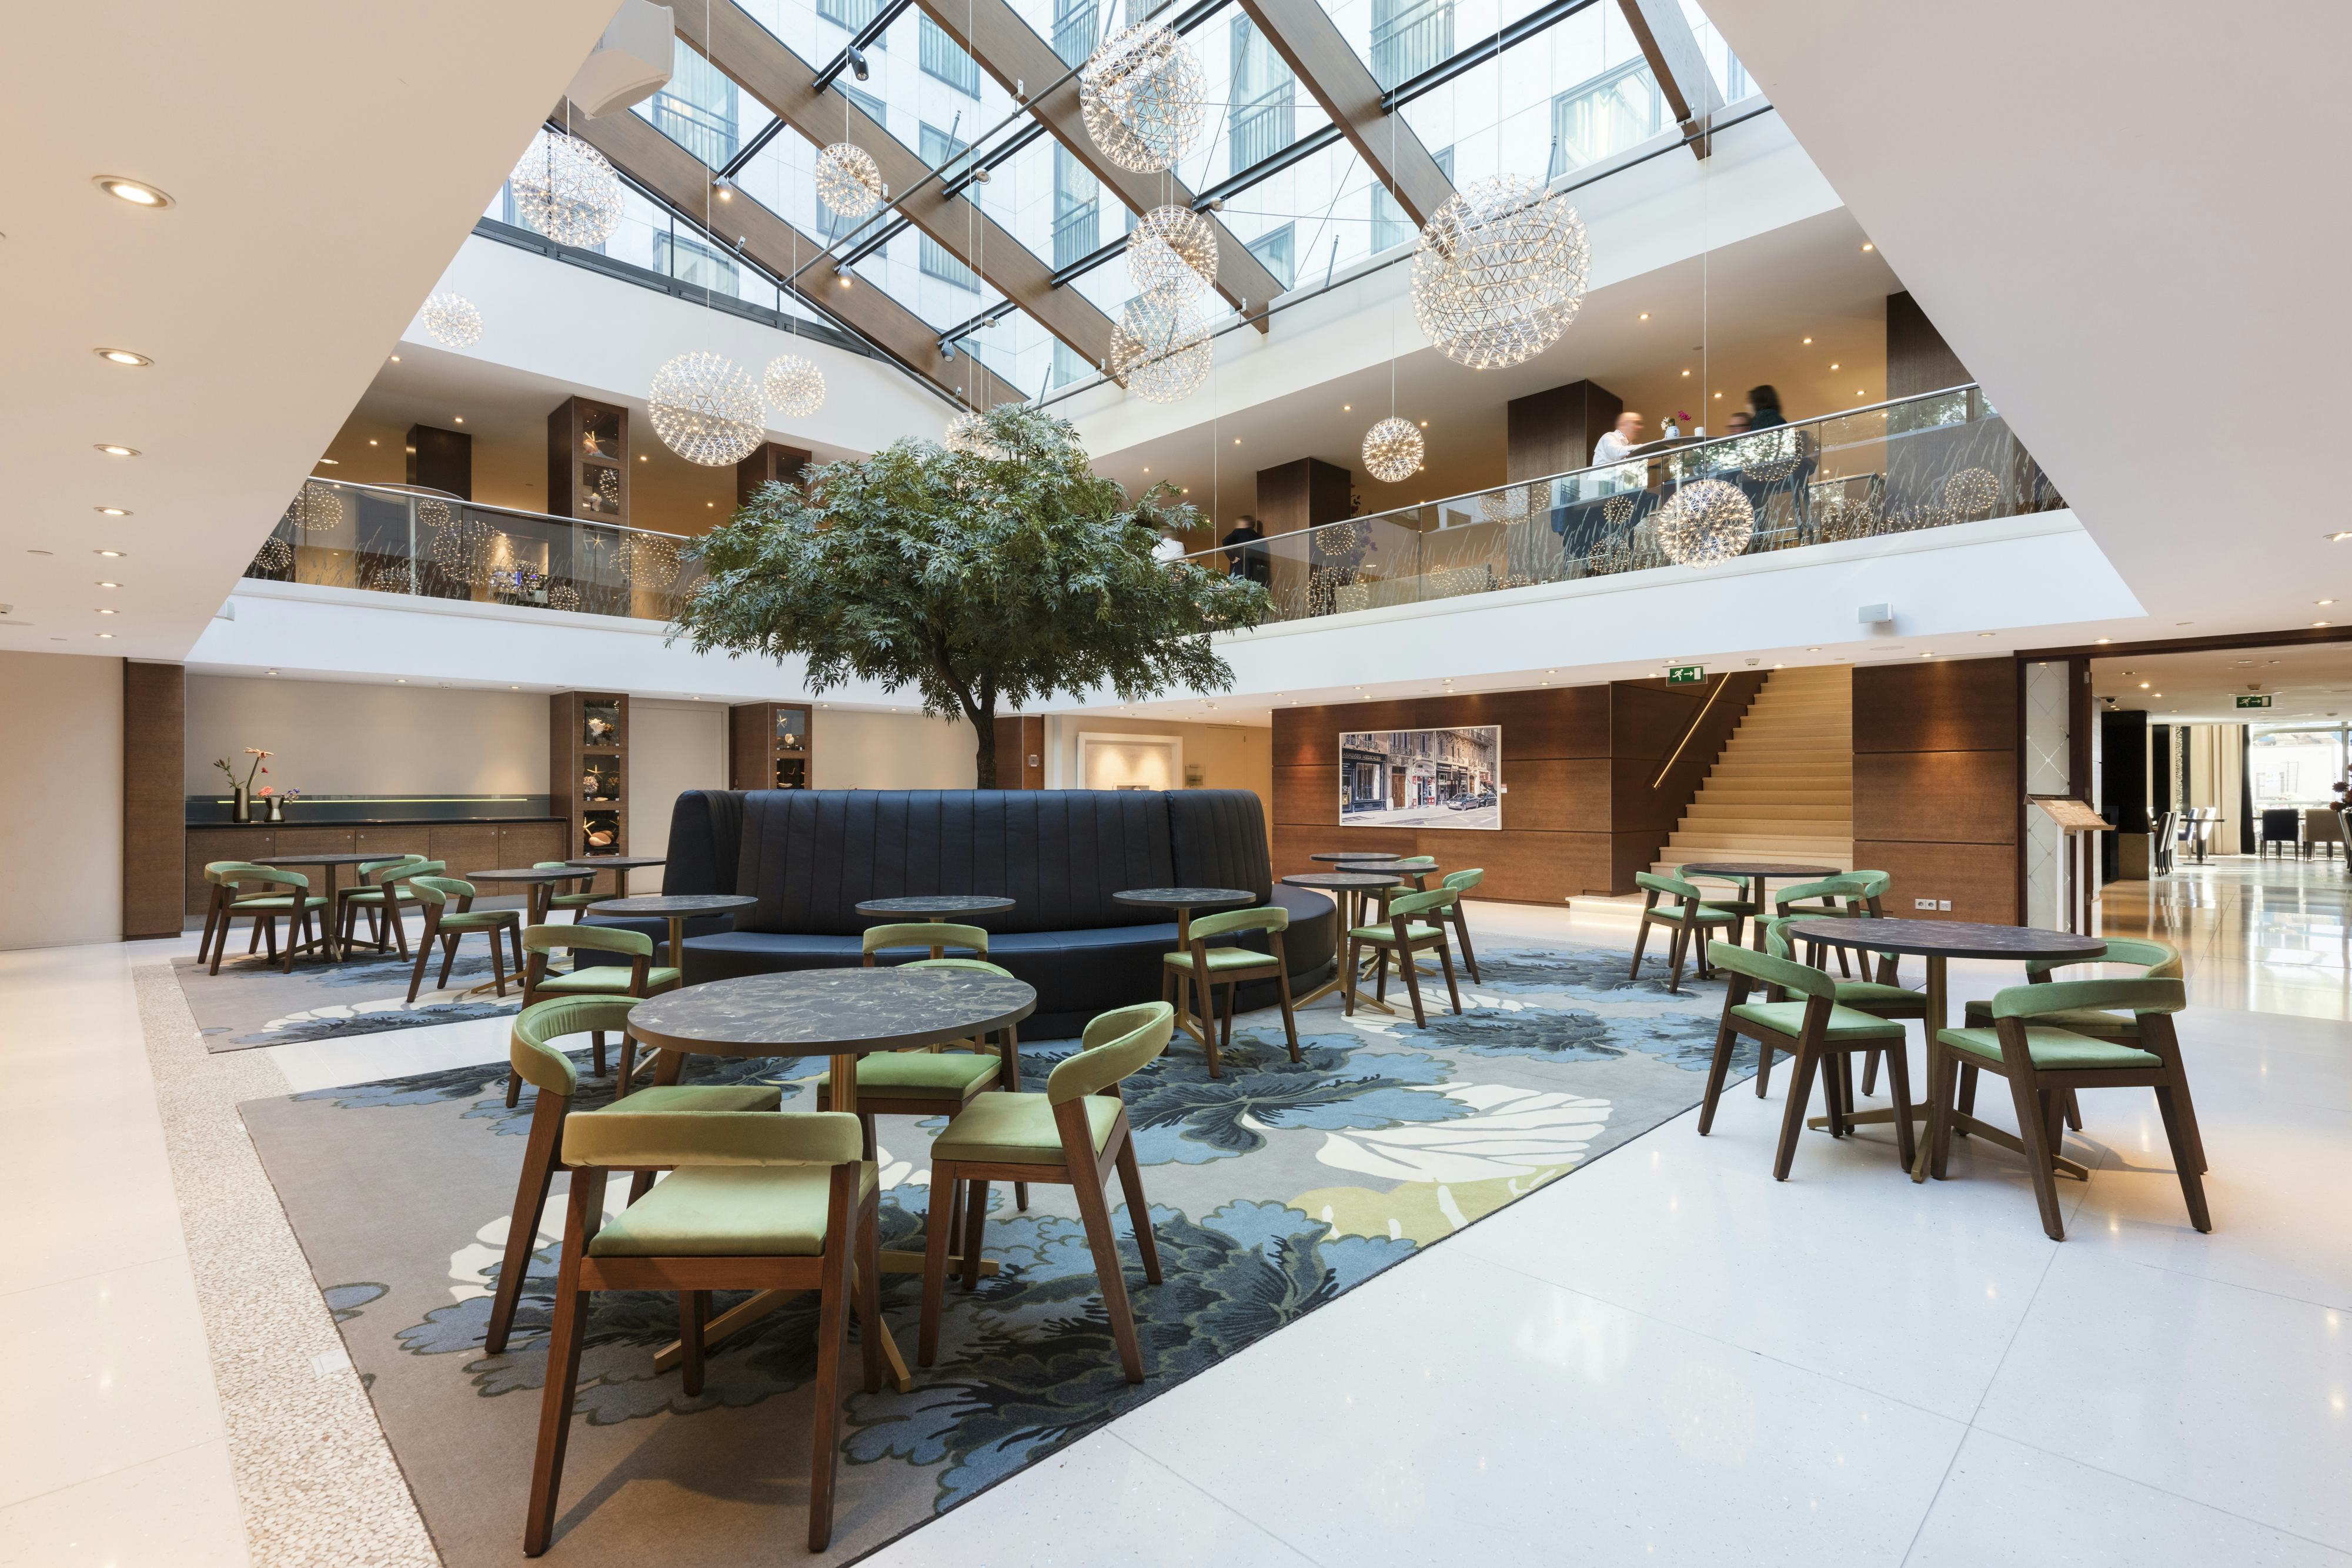 Hilton Den Haag: vernieuwde lobby en atrium